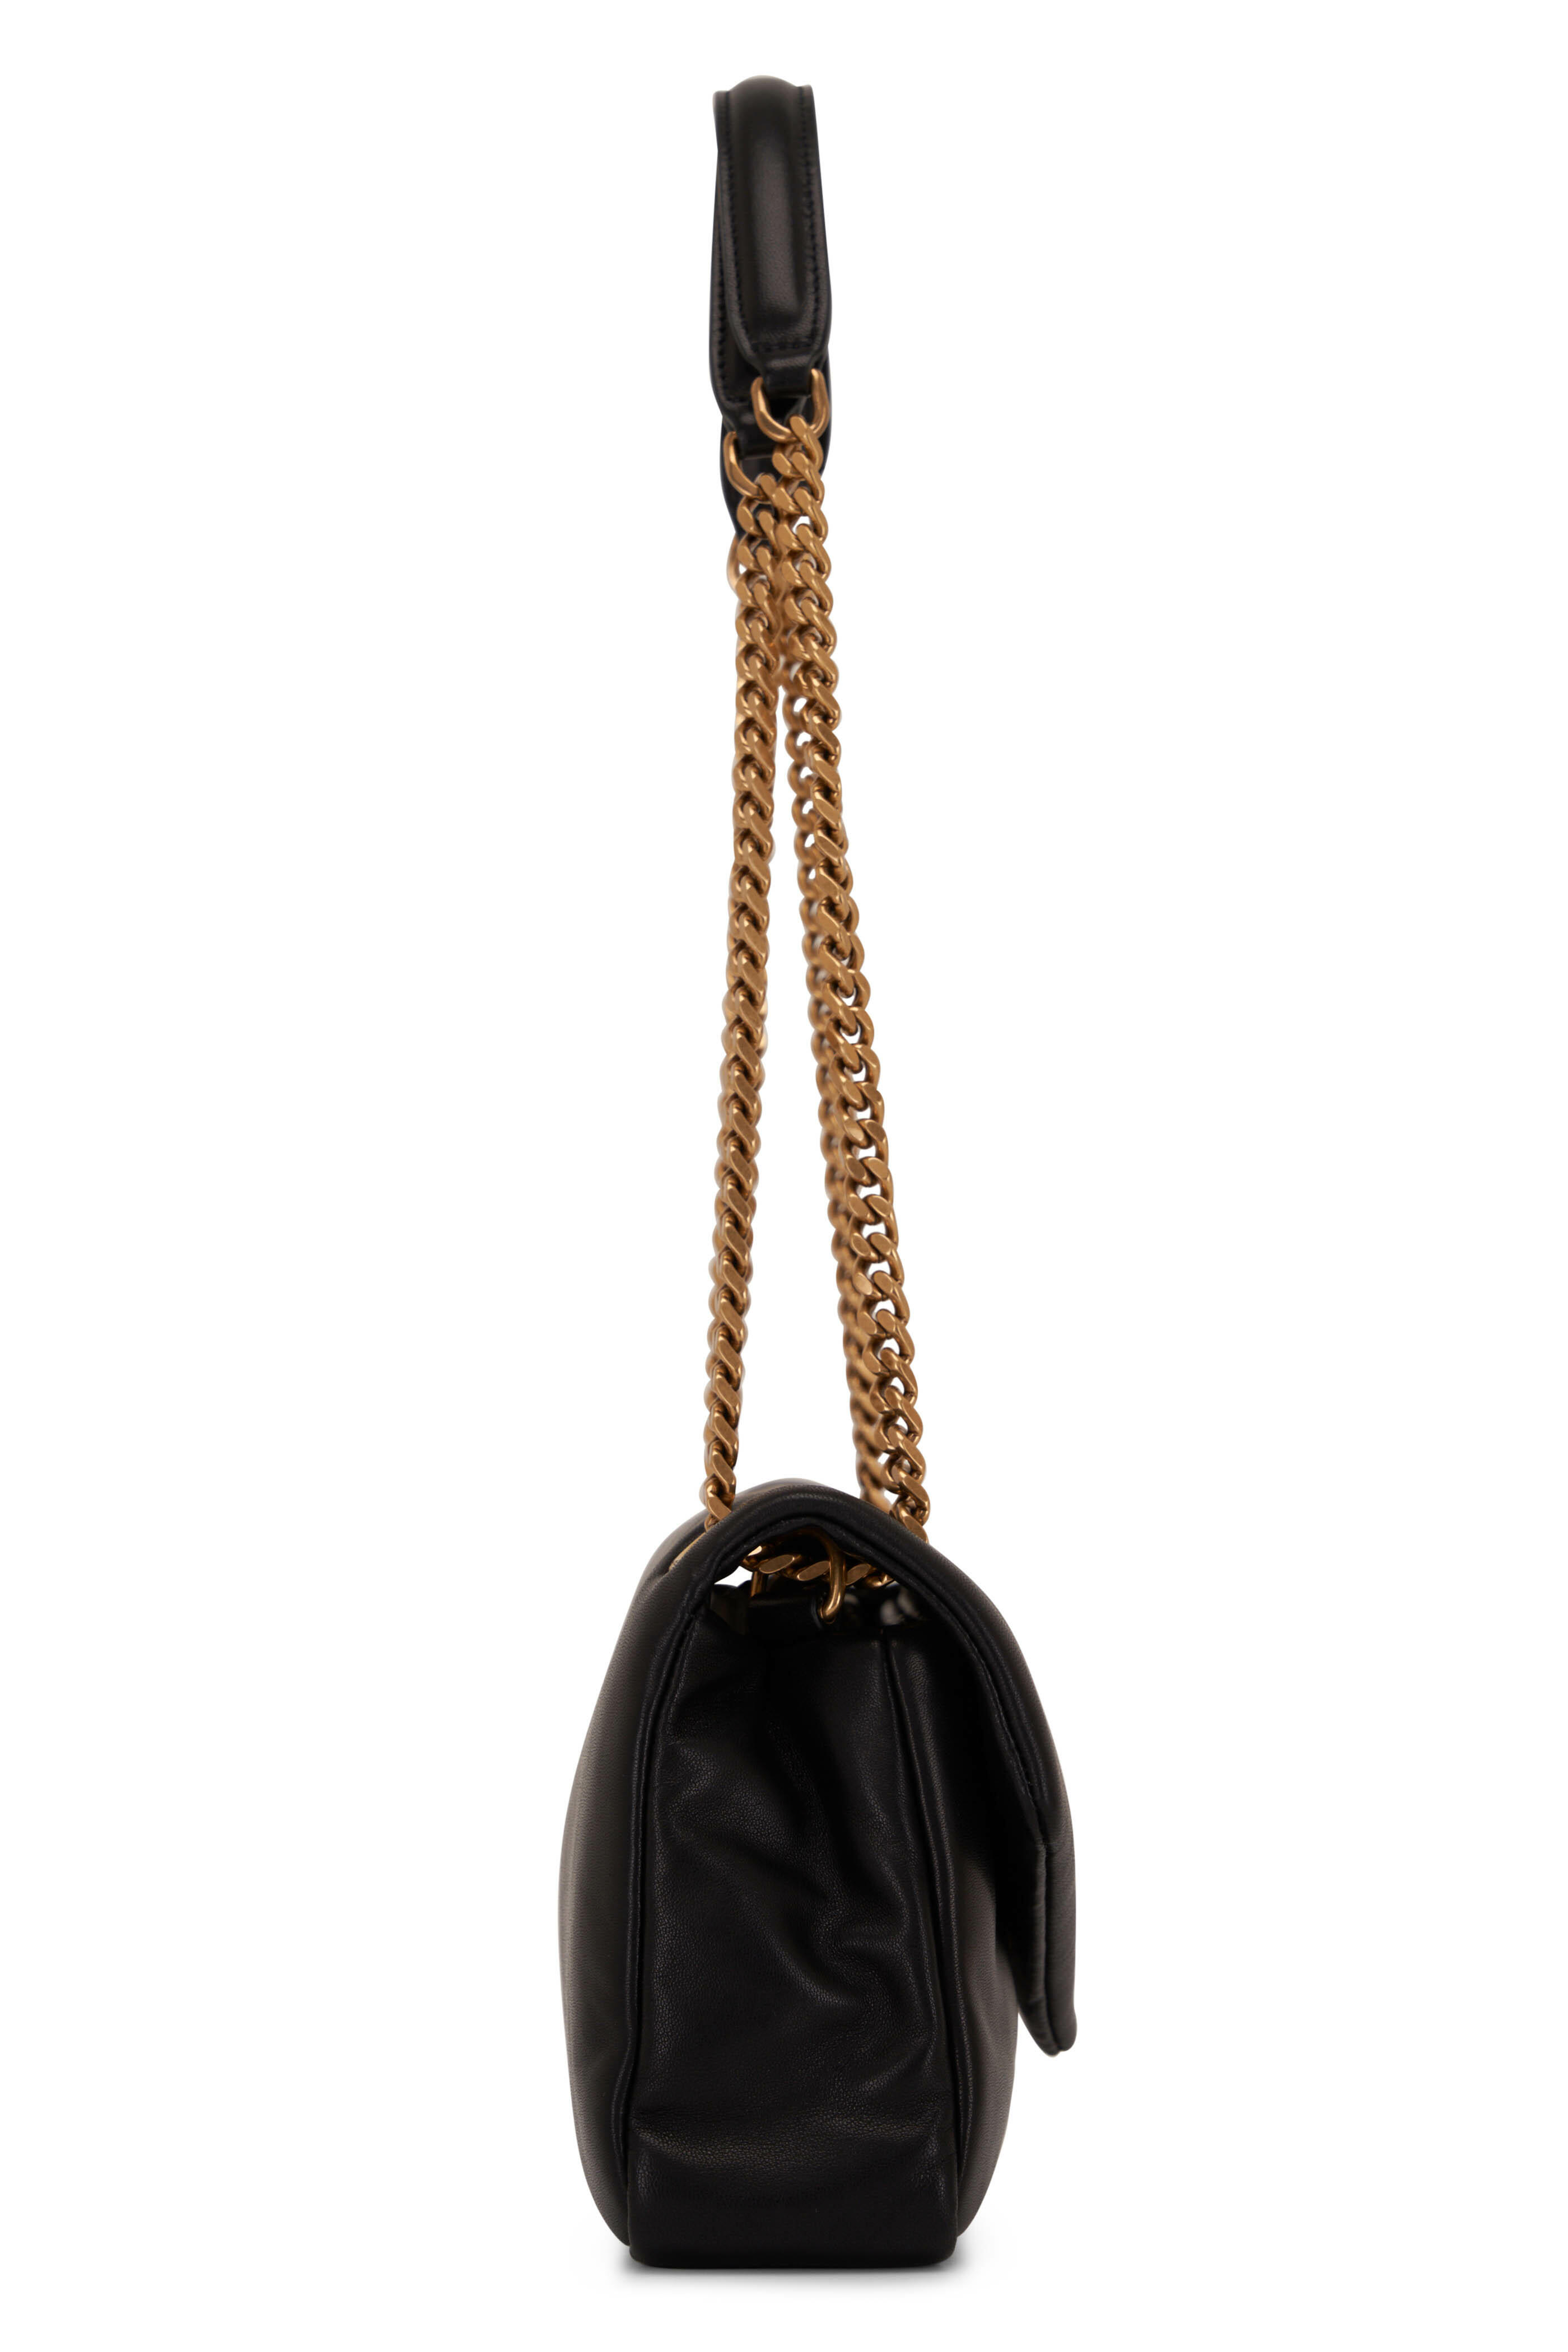 Calypso Patent Leather Shoulder Bag in Black - Saint Laurent